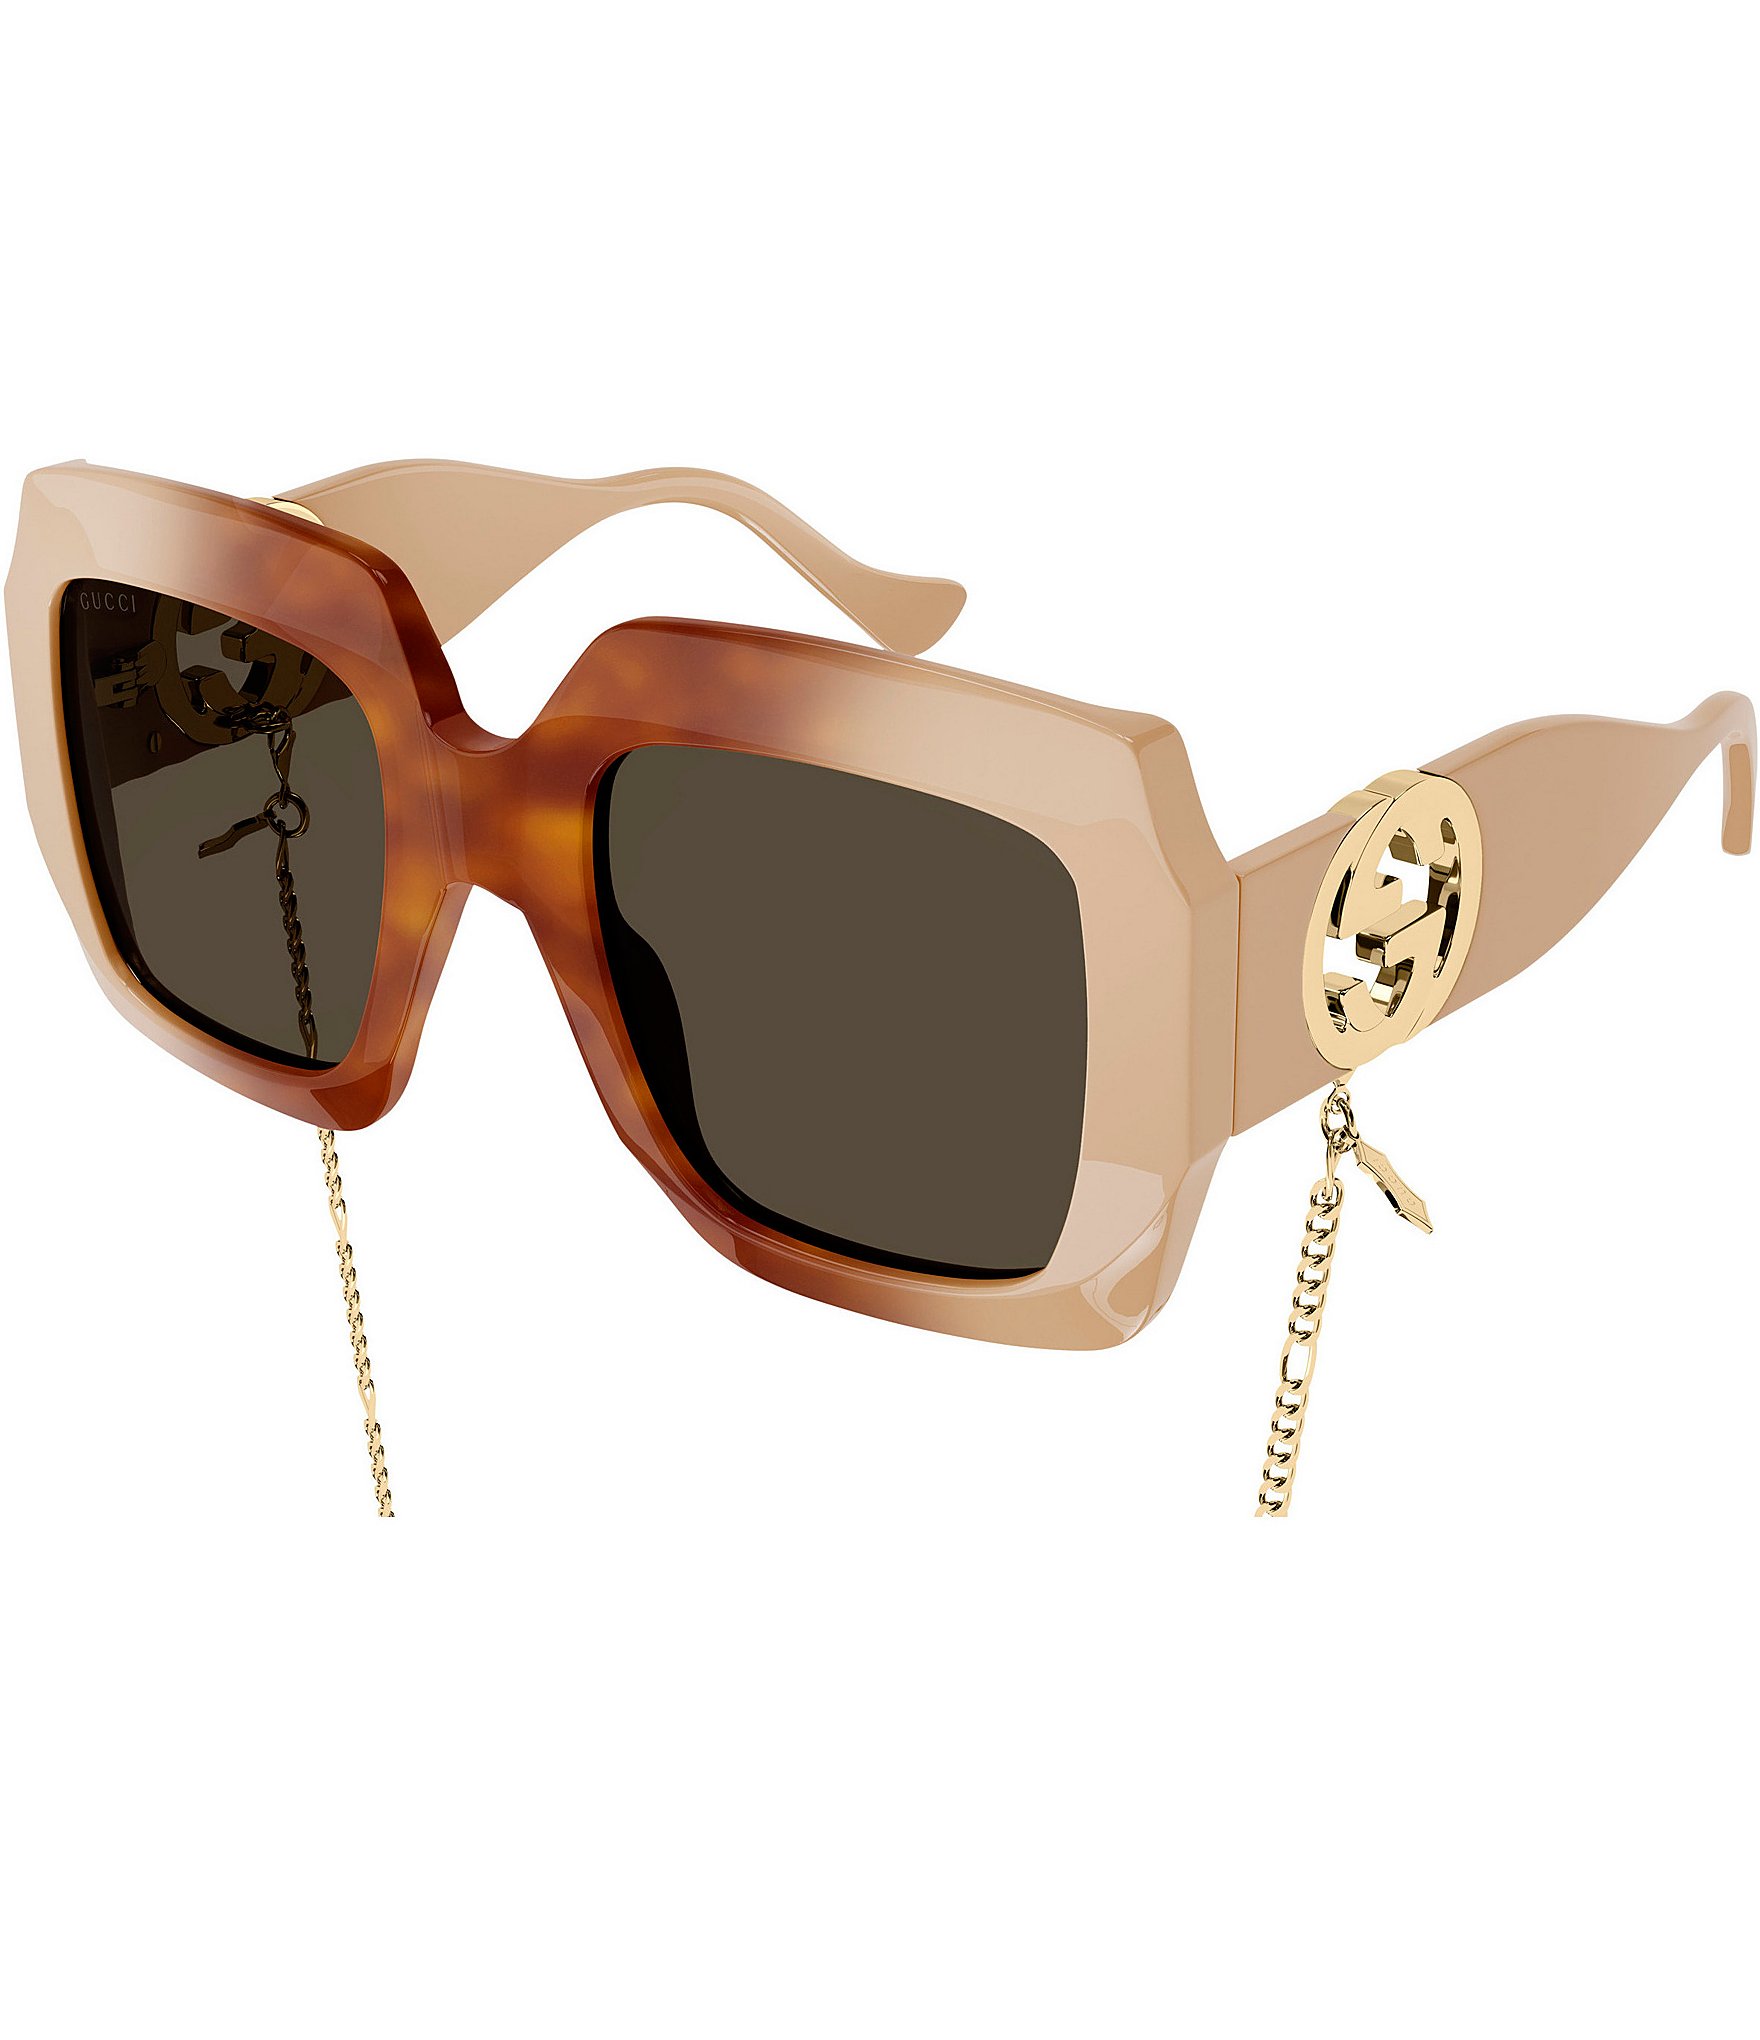 Gucci Women's GG1425S Generation 53mm Rectangle Sunglasses